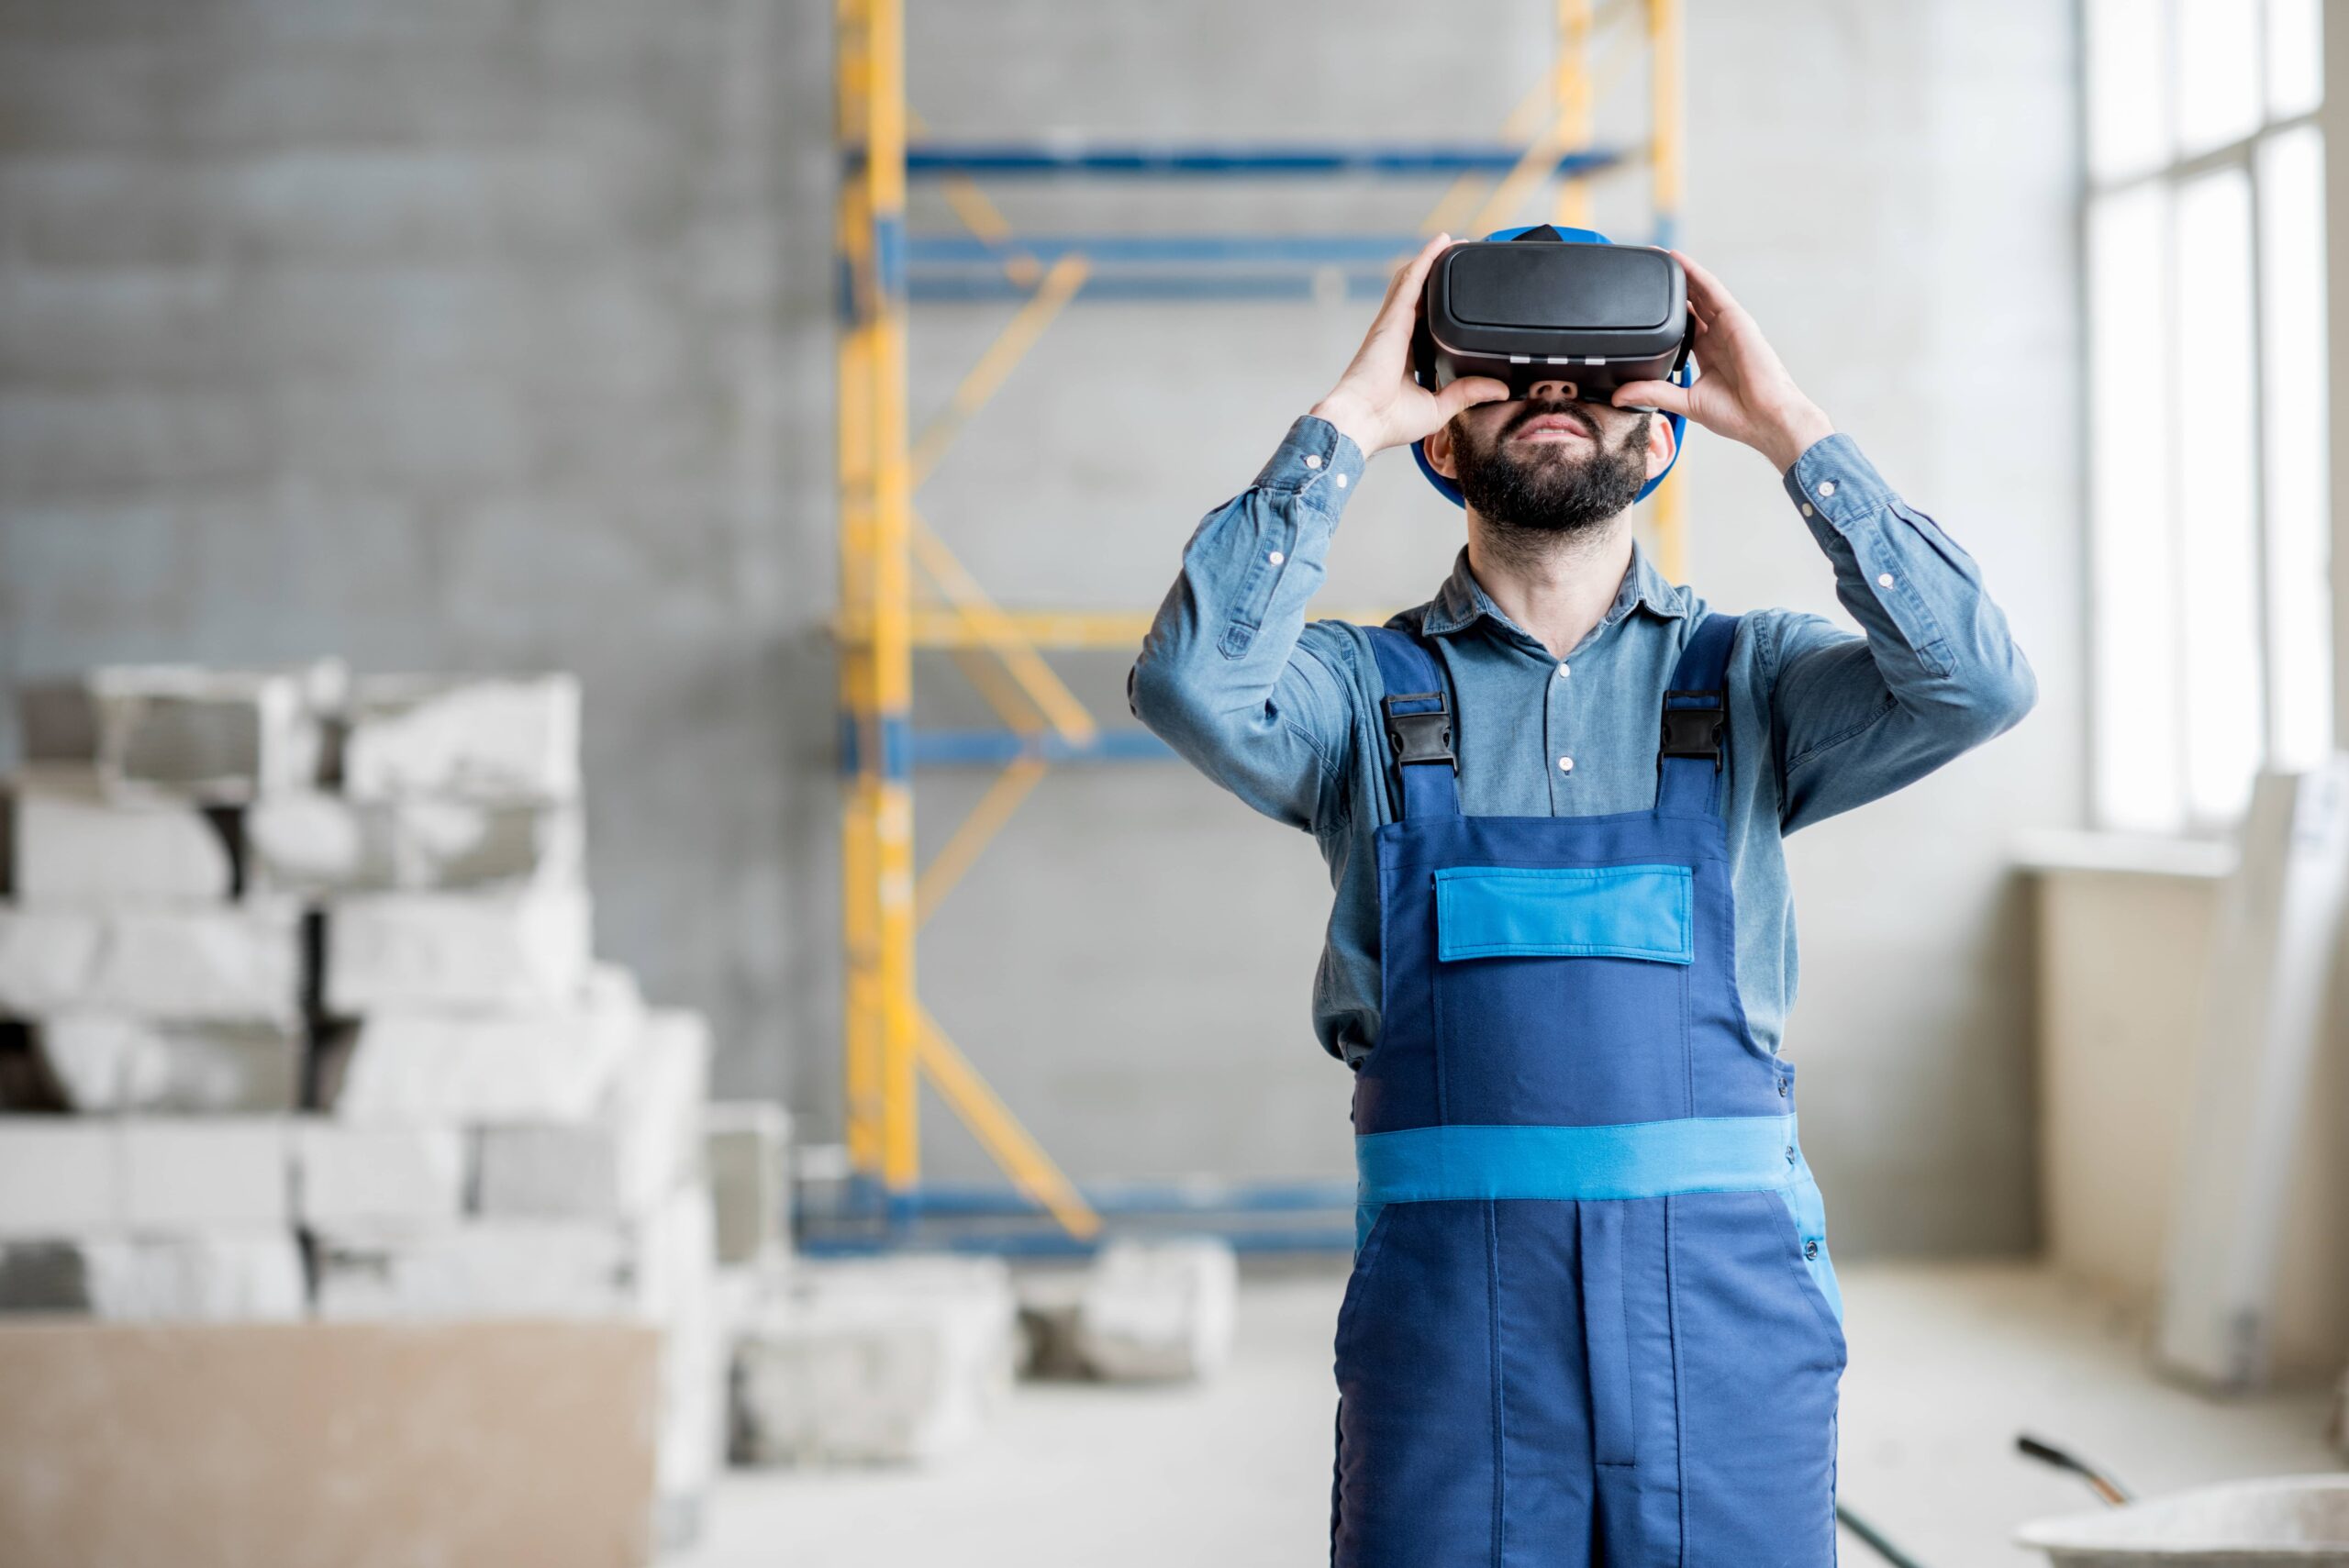 The impact of virtual reality on a training organization